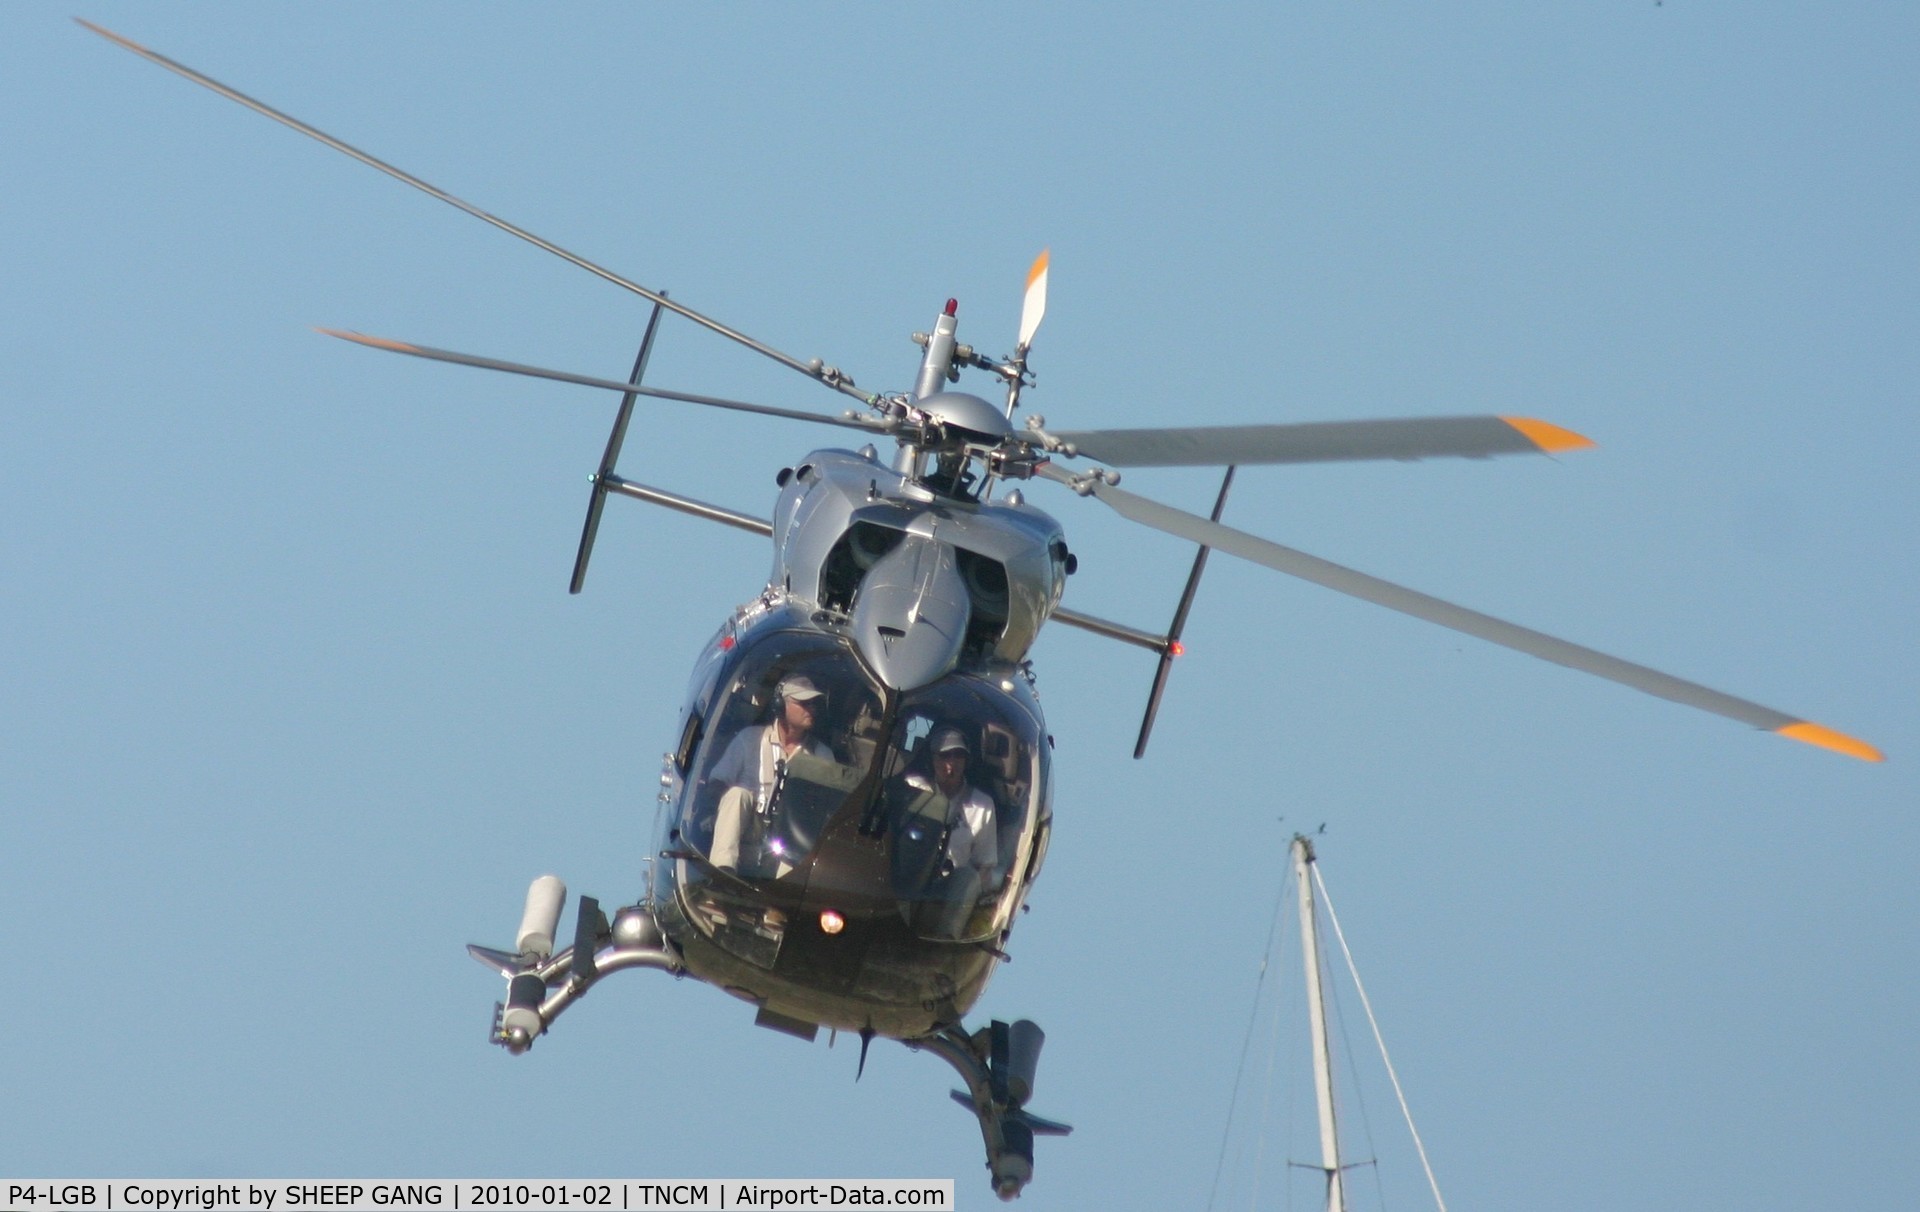 P4-LGB, 2004 Eurocopter-Kawasaki BK-117C-2 C/N 9052, P4-LGB departing the helipad